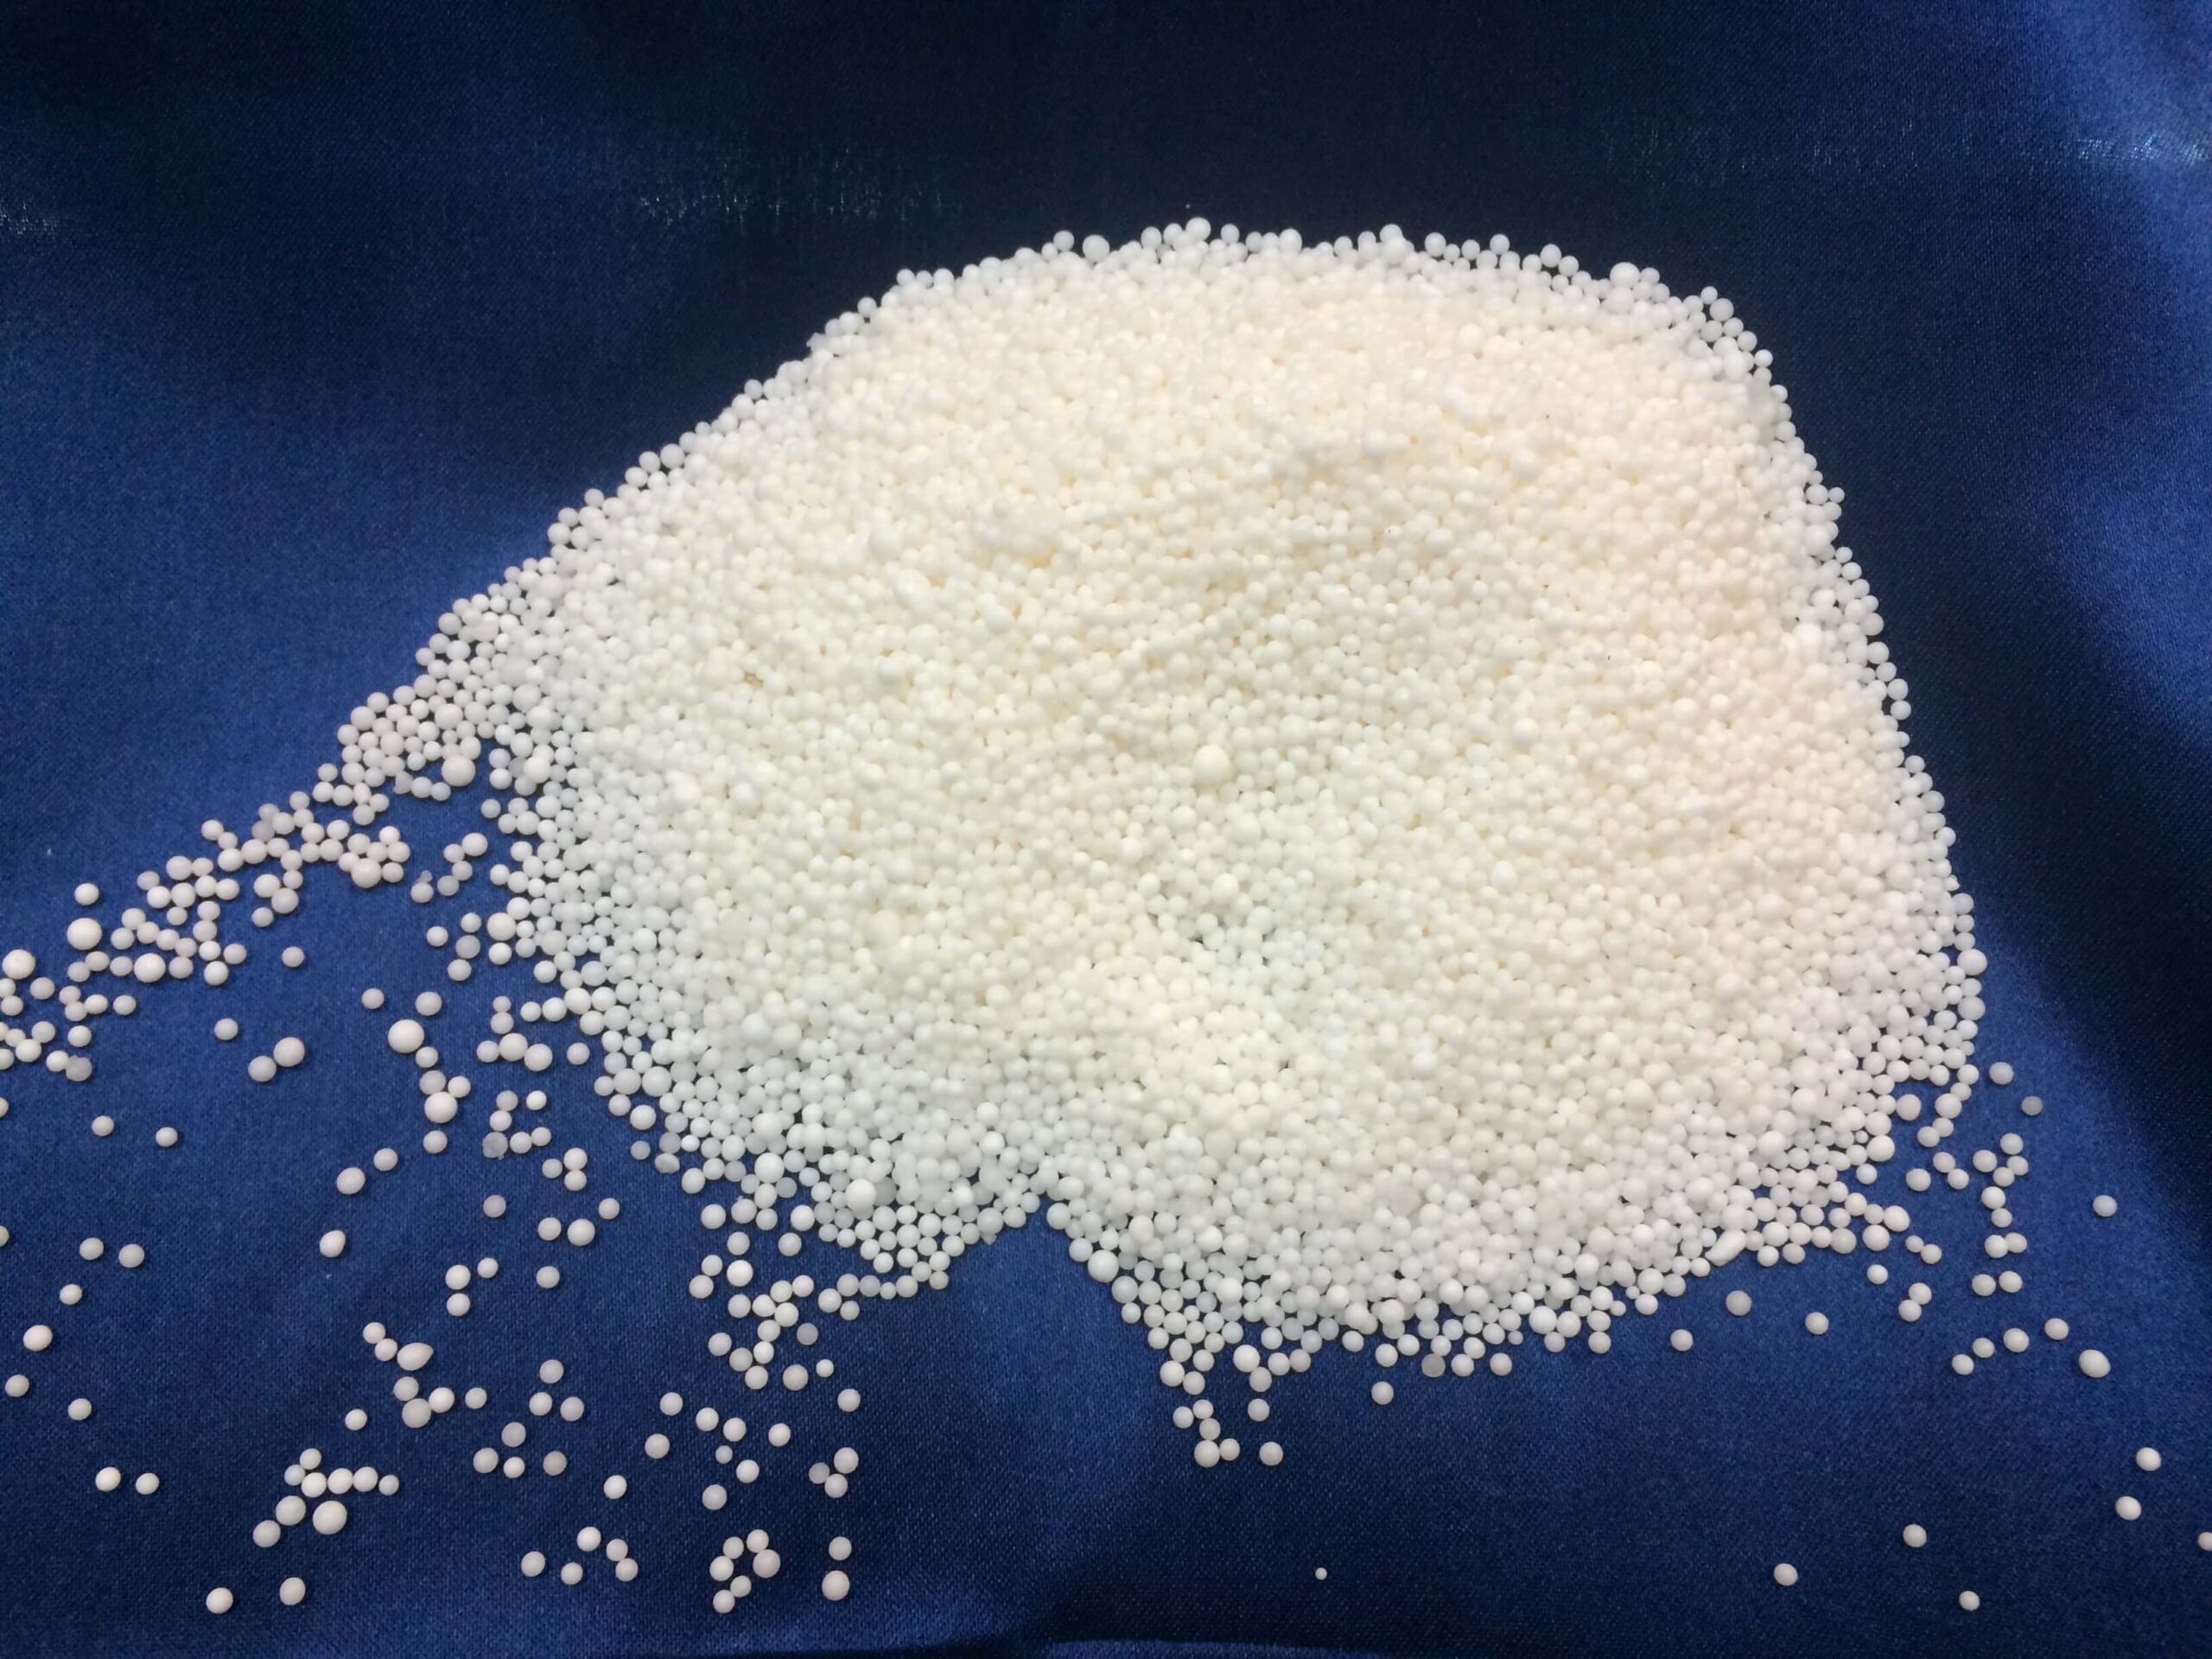 Ammonium Nitrate - Non-coated prill form